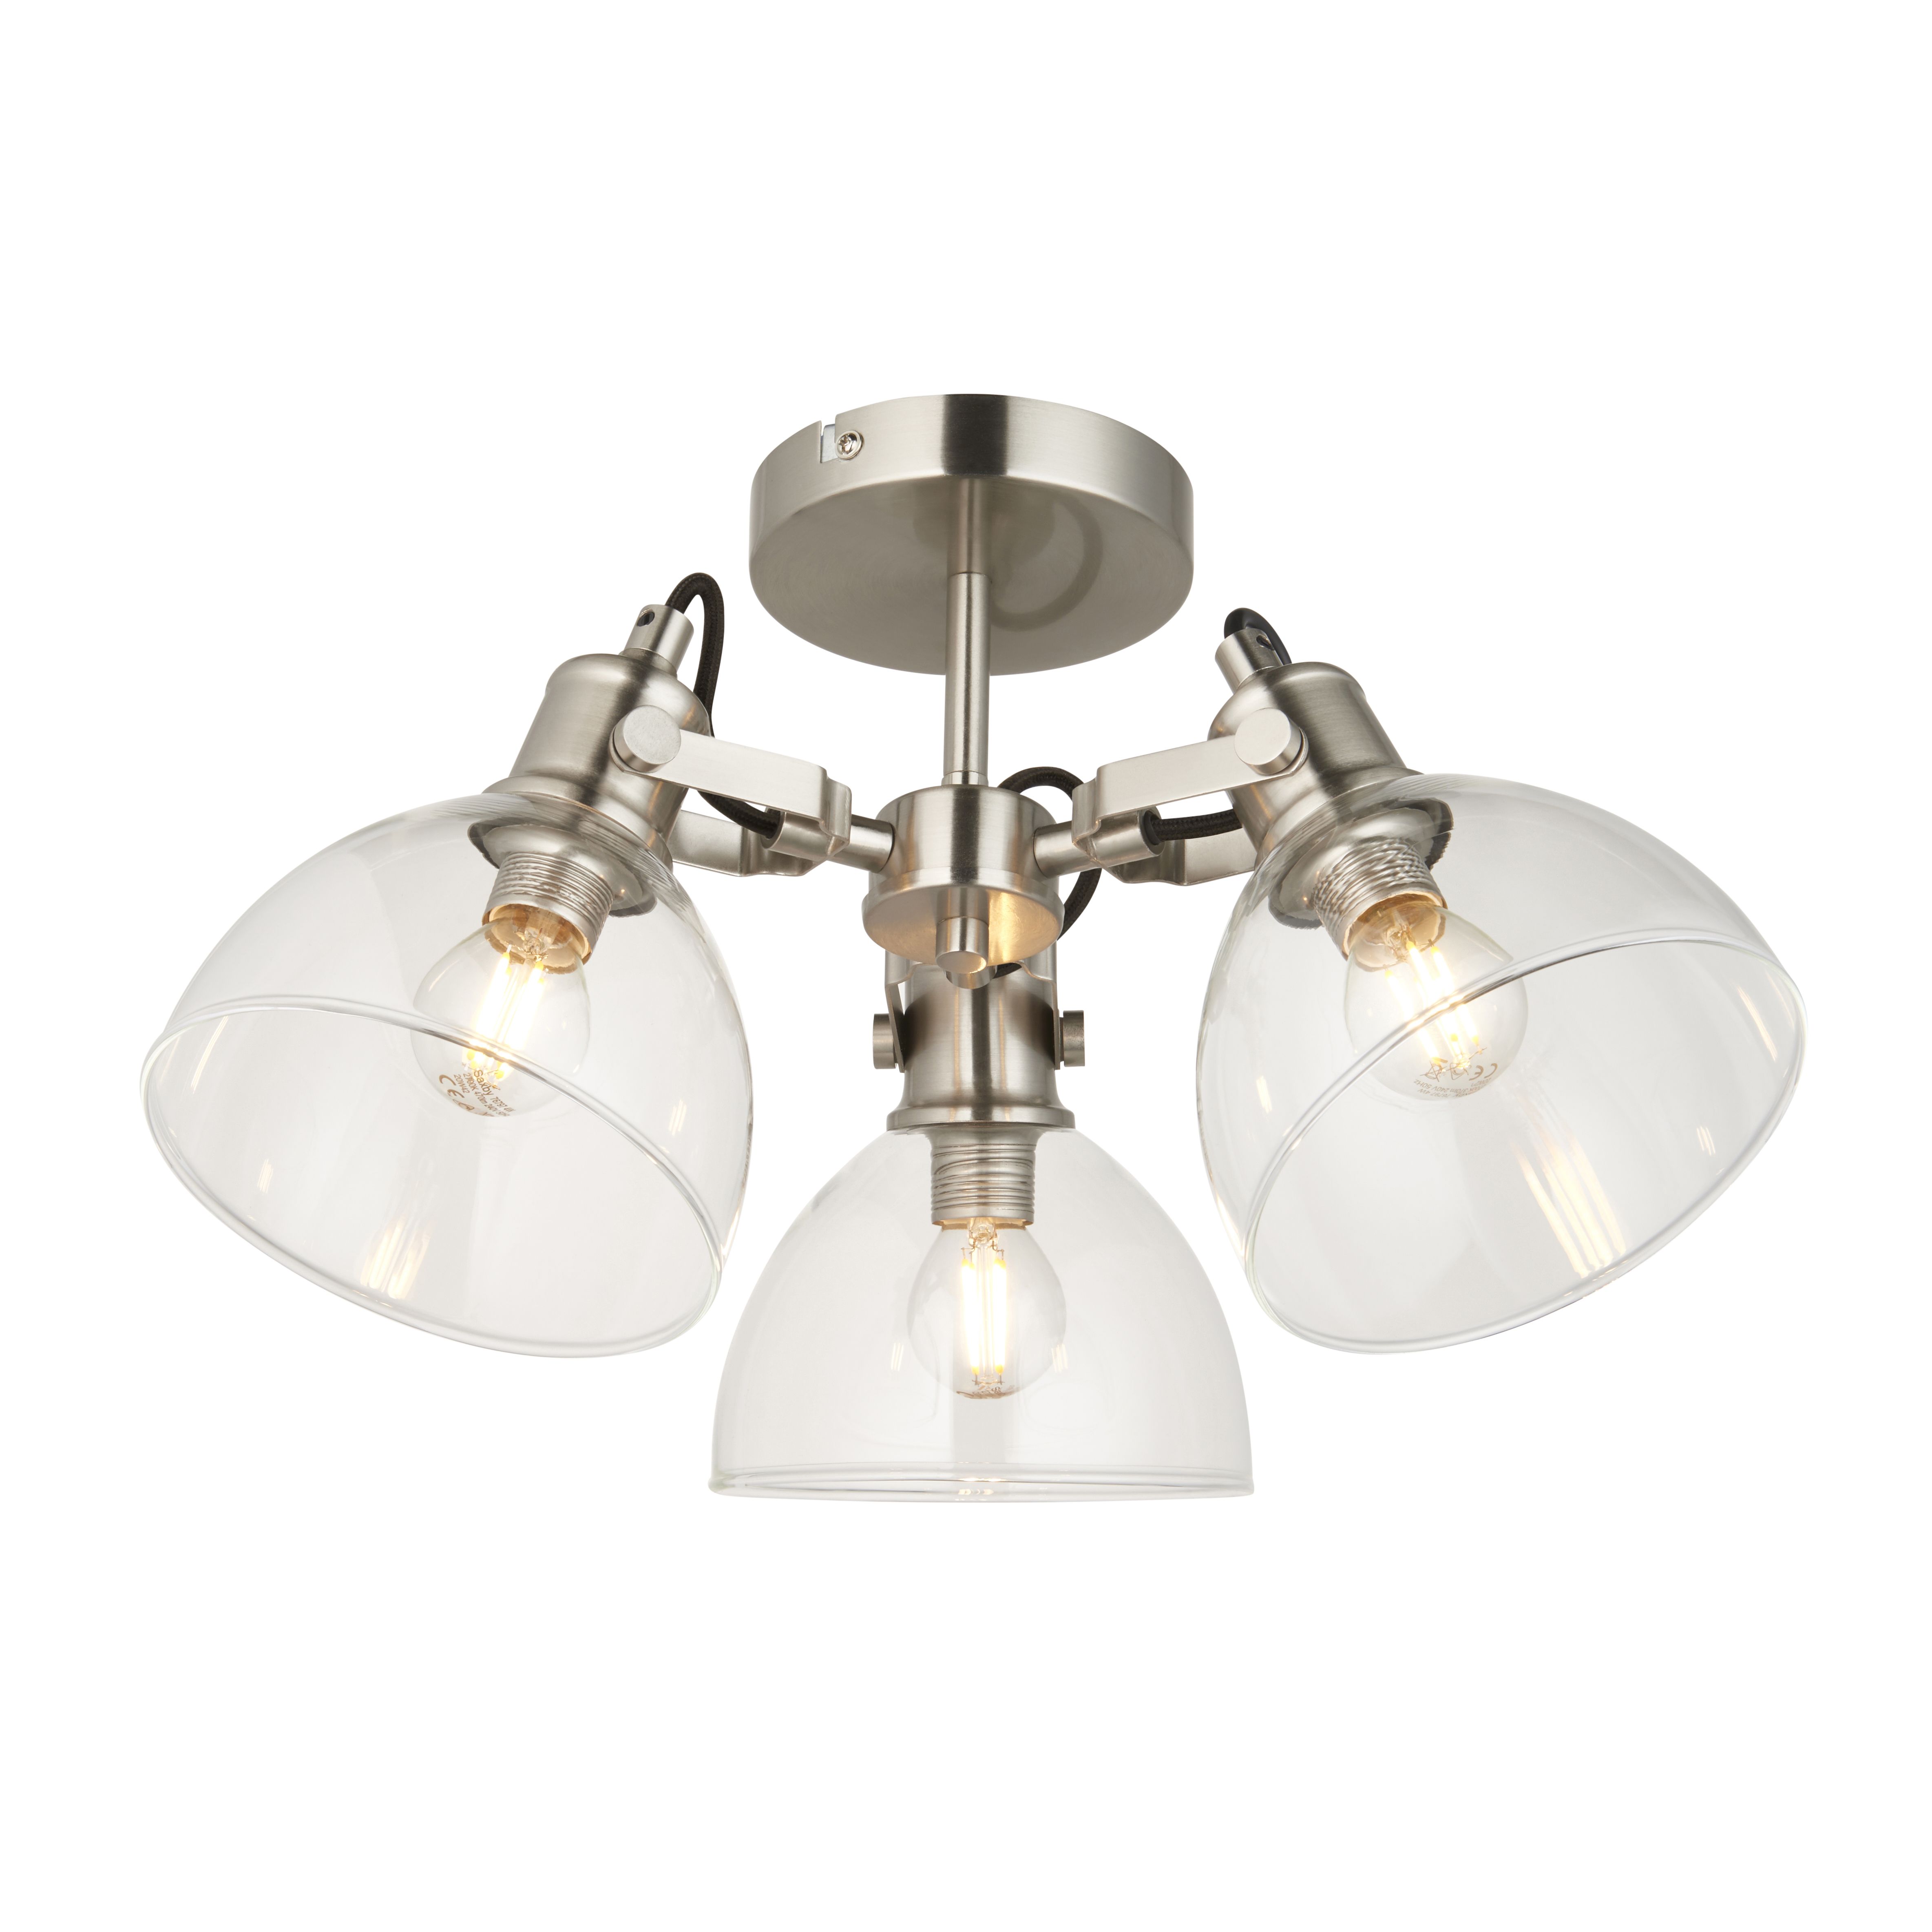 Acrobat Glass & steel Nickel effect 3 Lamp LED Ceiling light